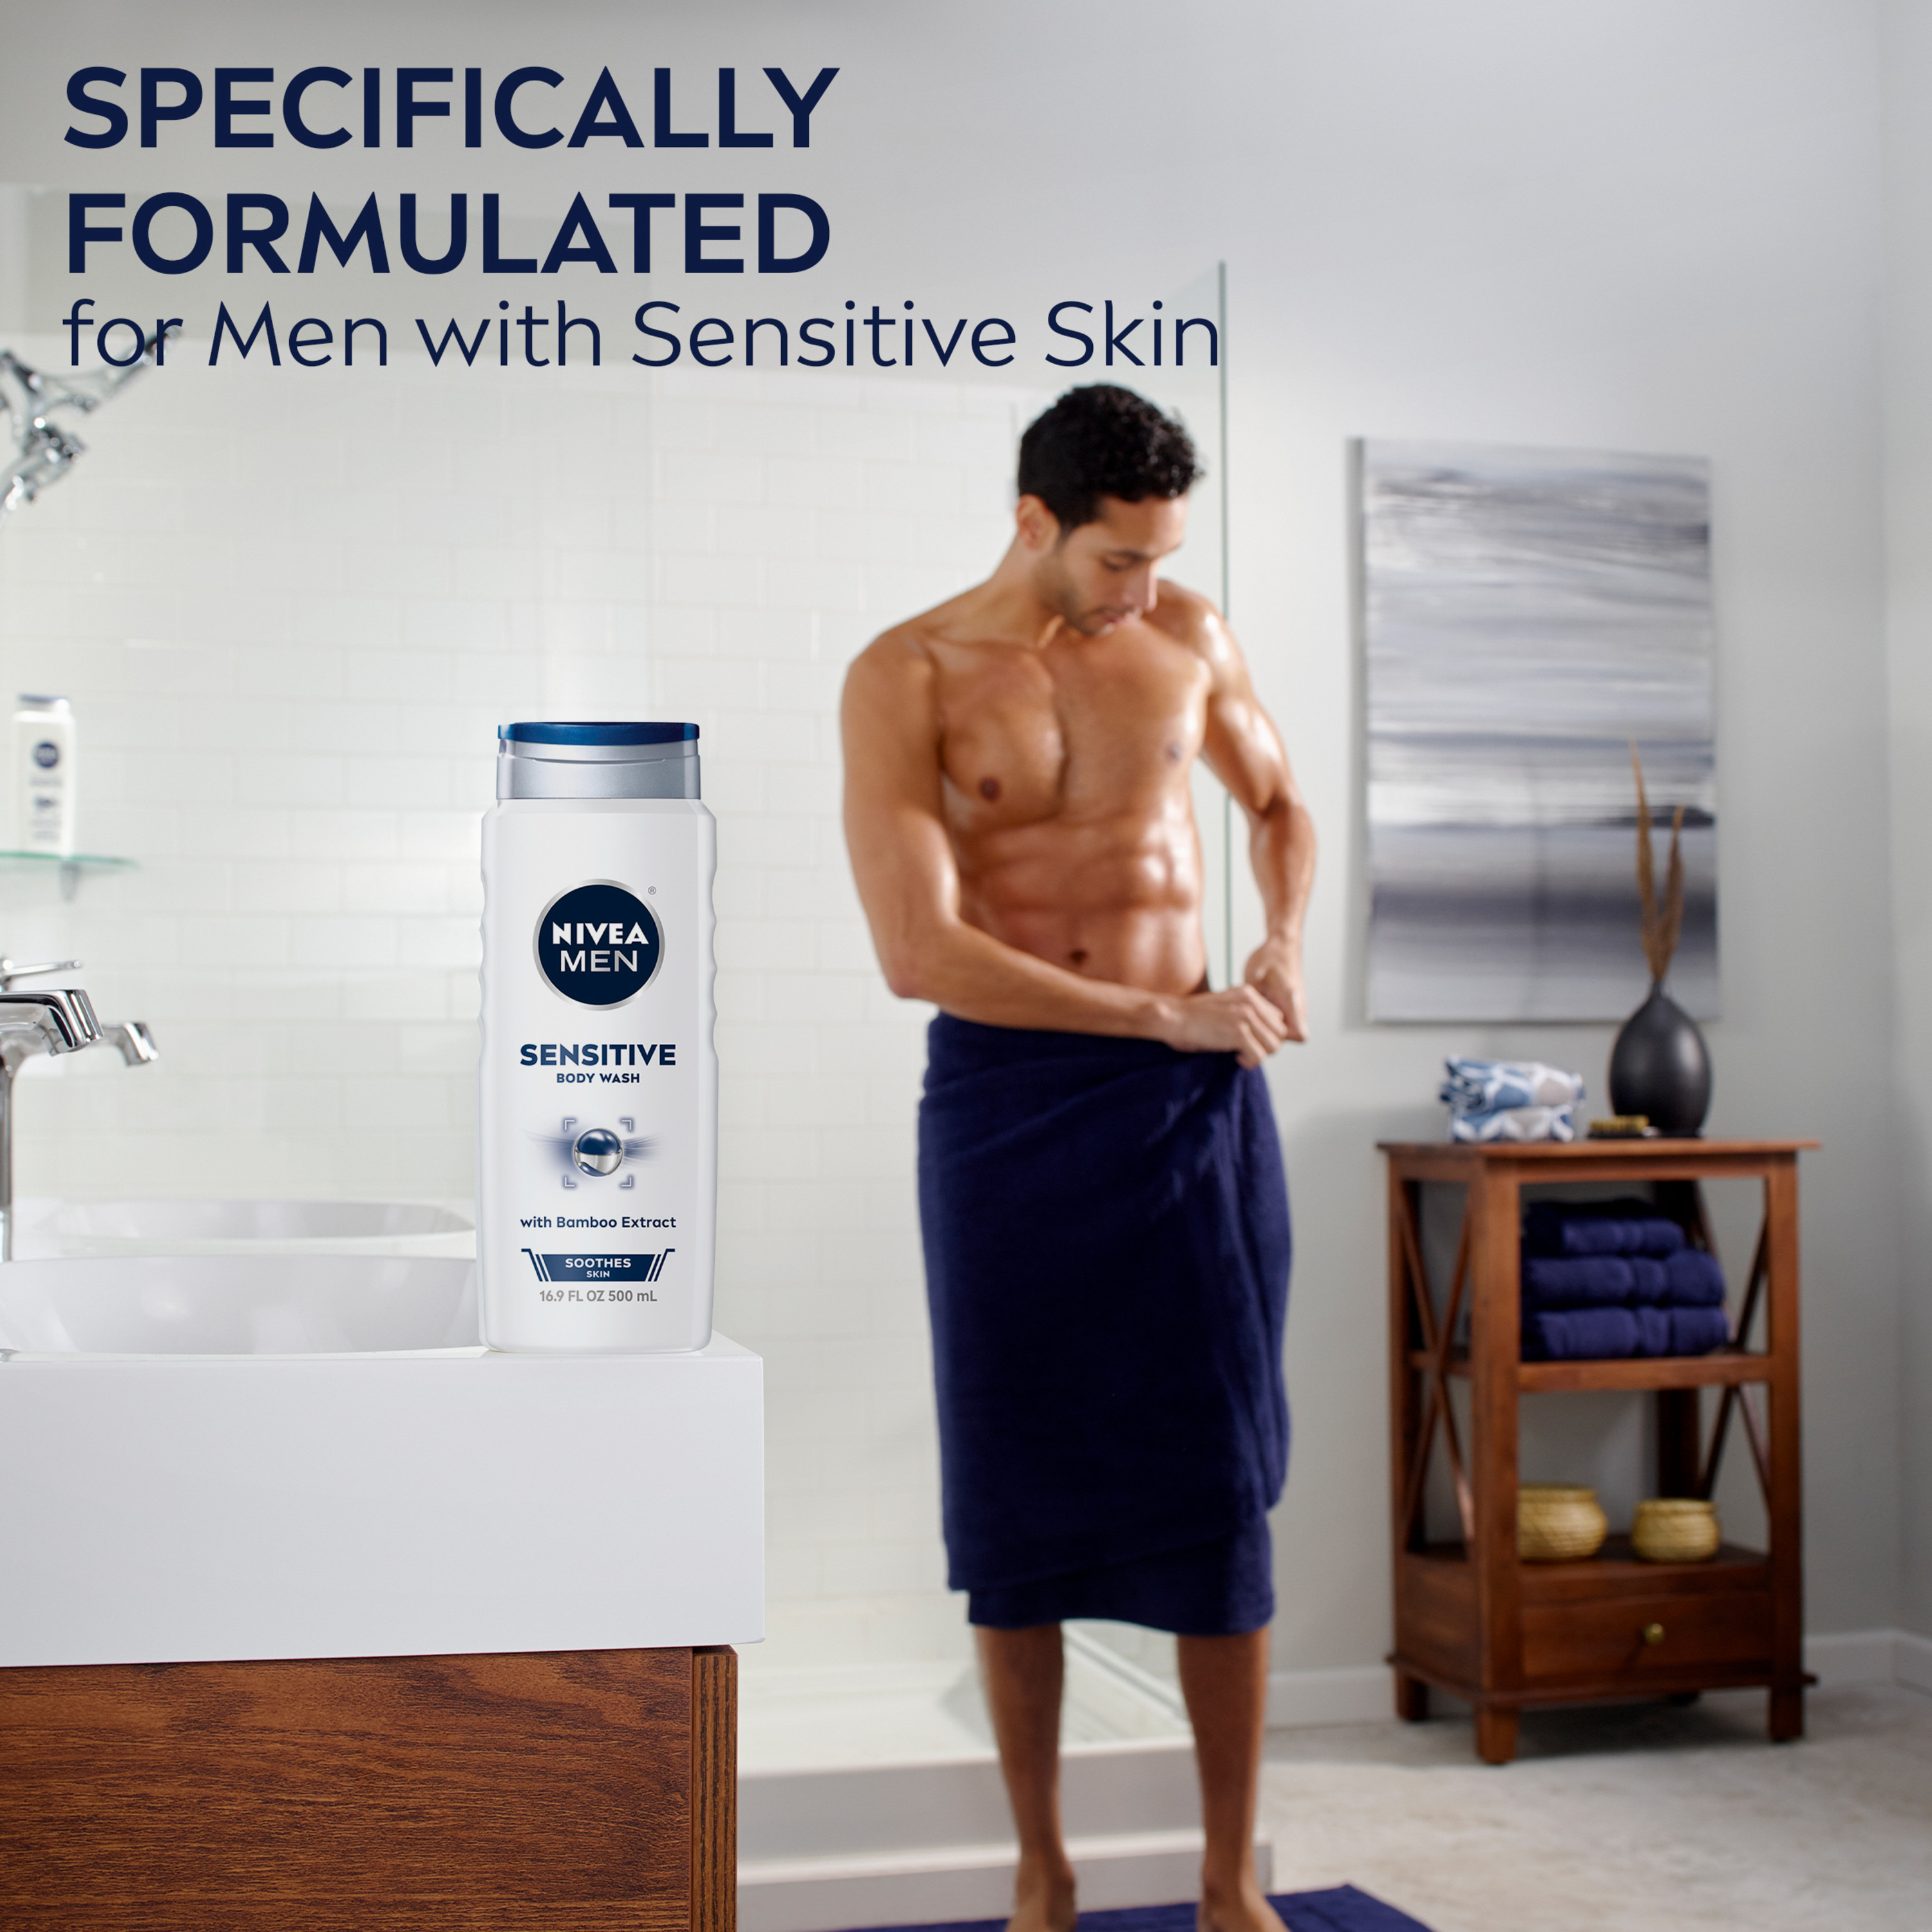 NIVEA MEN Sensitive Body Wash with Bamboo Extract, 16.9 Fl Oz Bottle - image 5 of 13